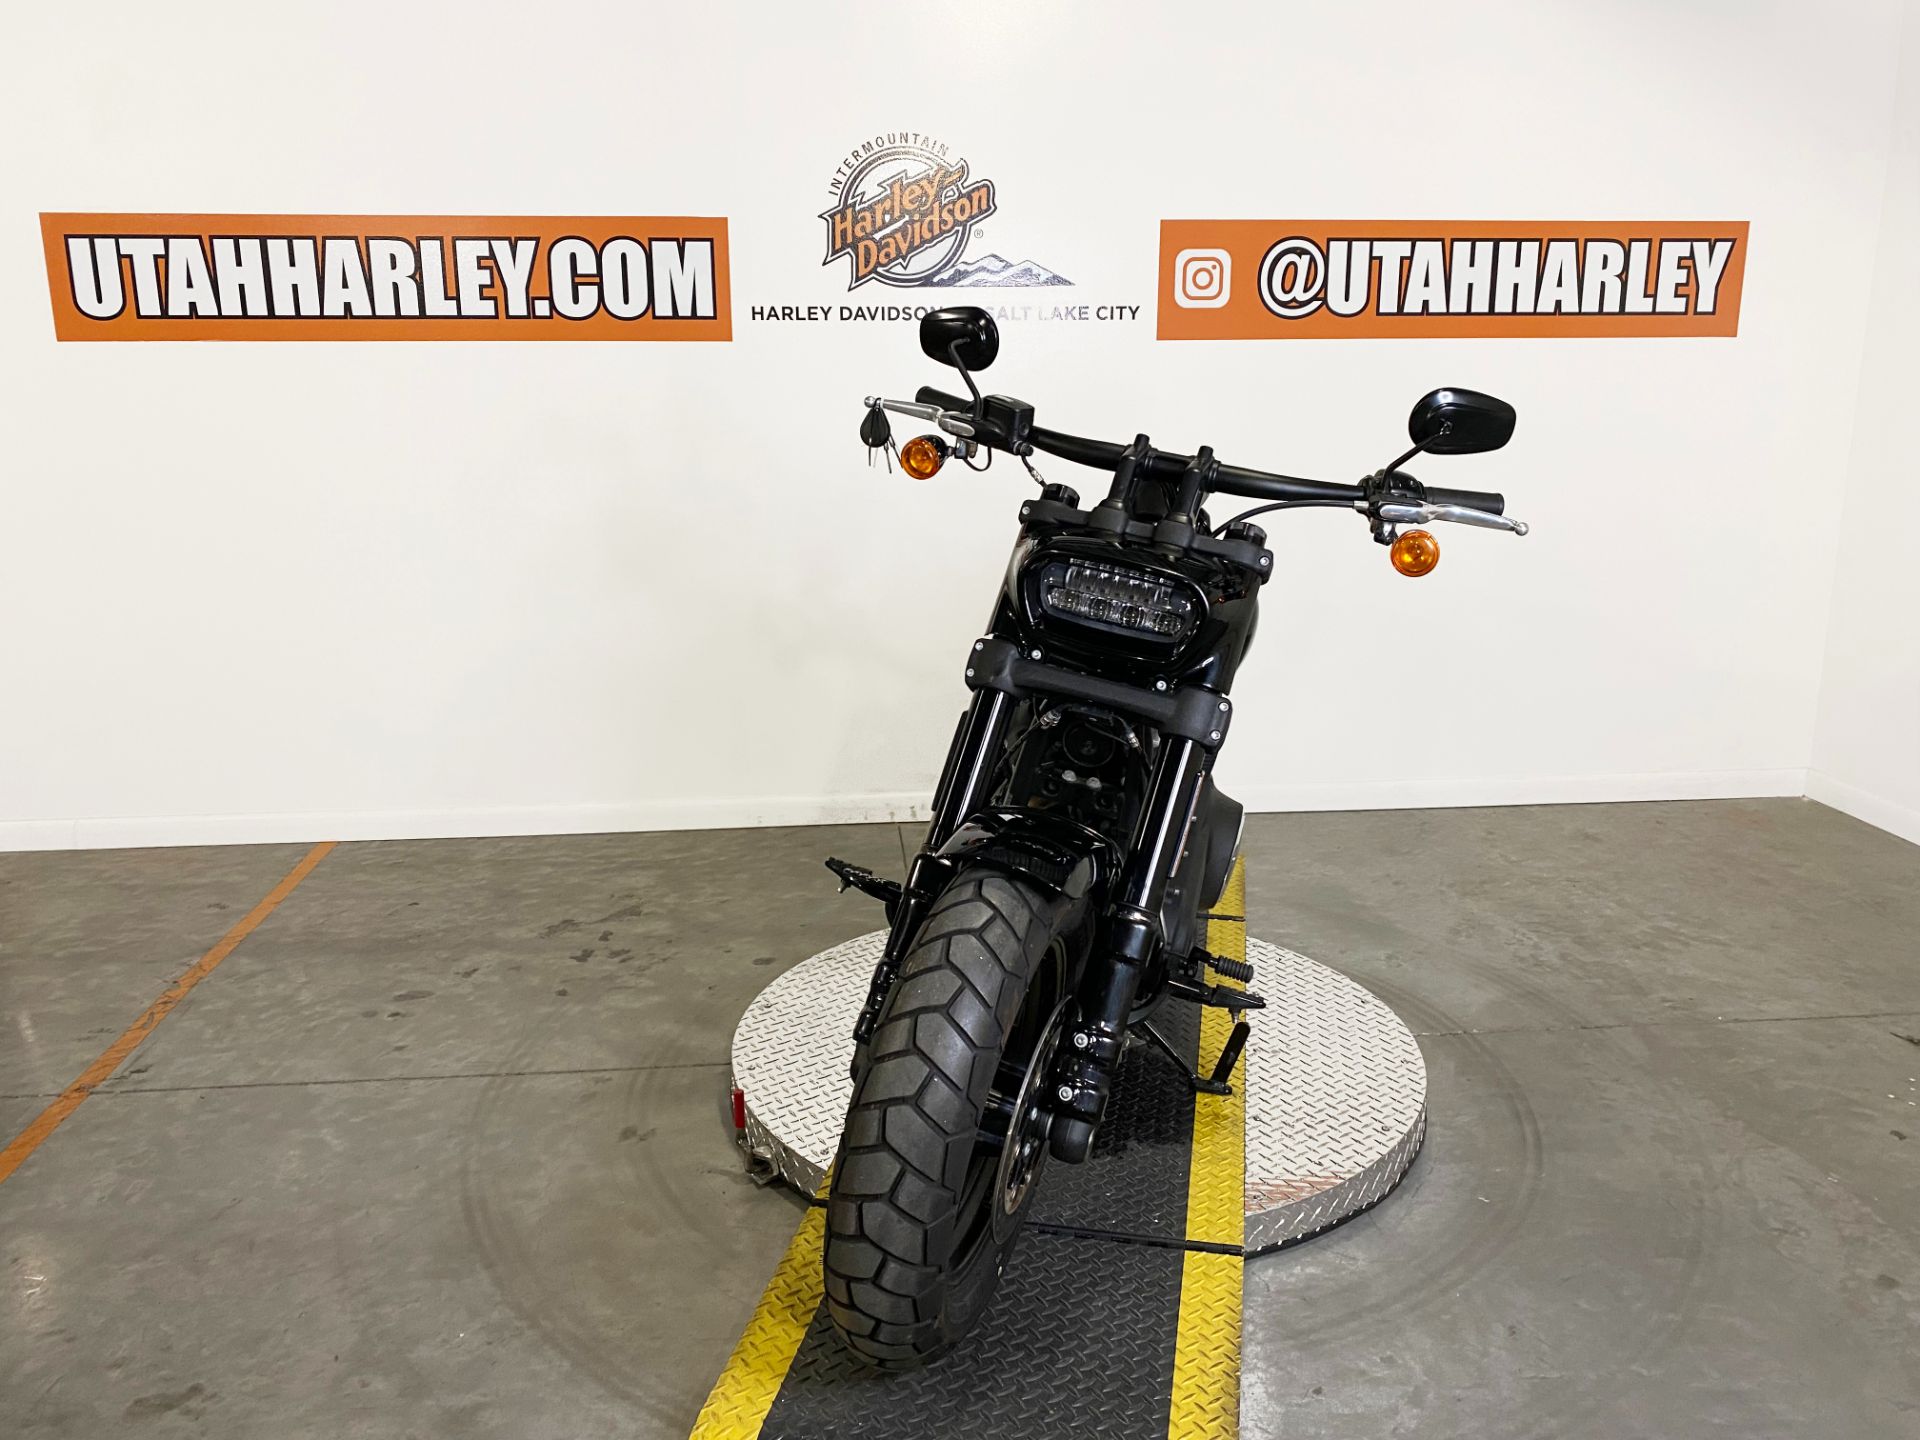 2018 Harley-Davidson Fat Bob in Salt Lake City, Utah - Photo 3